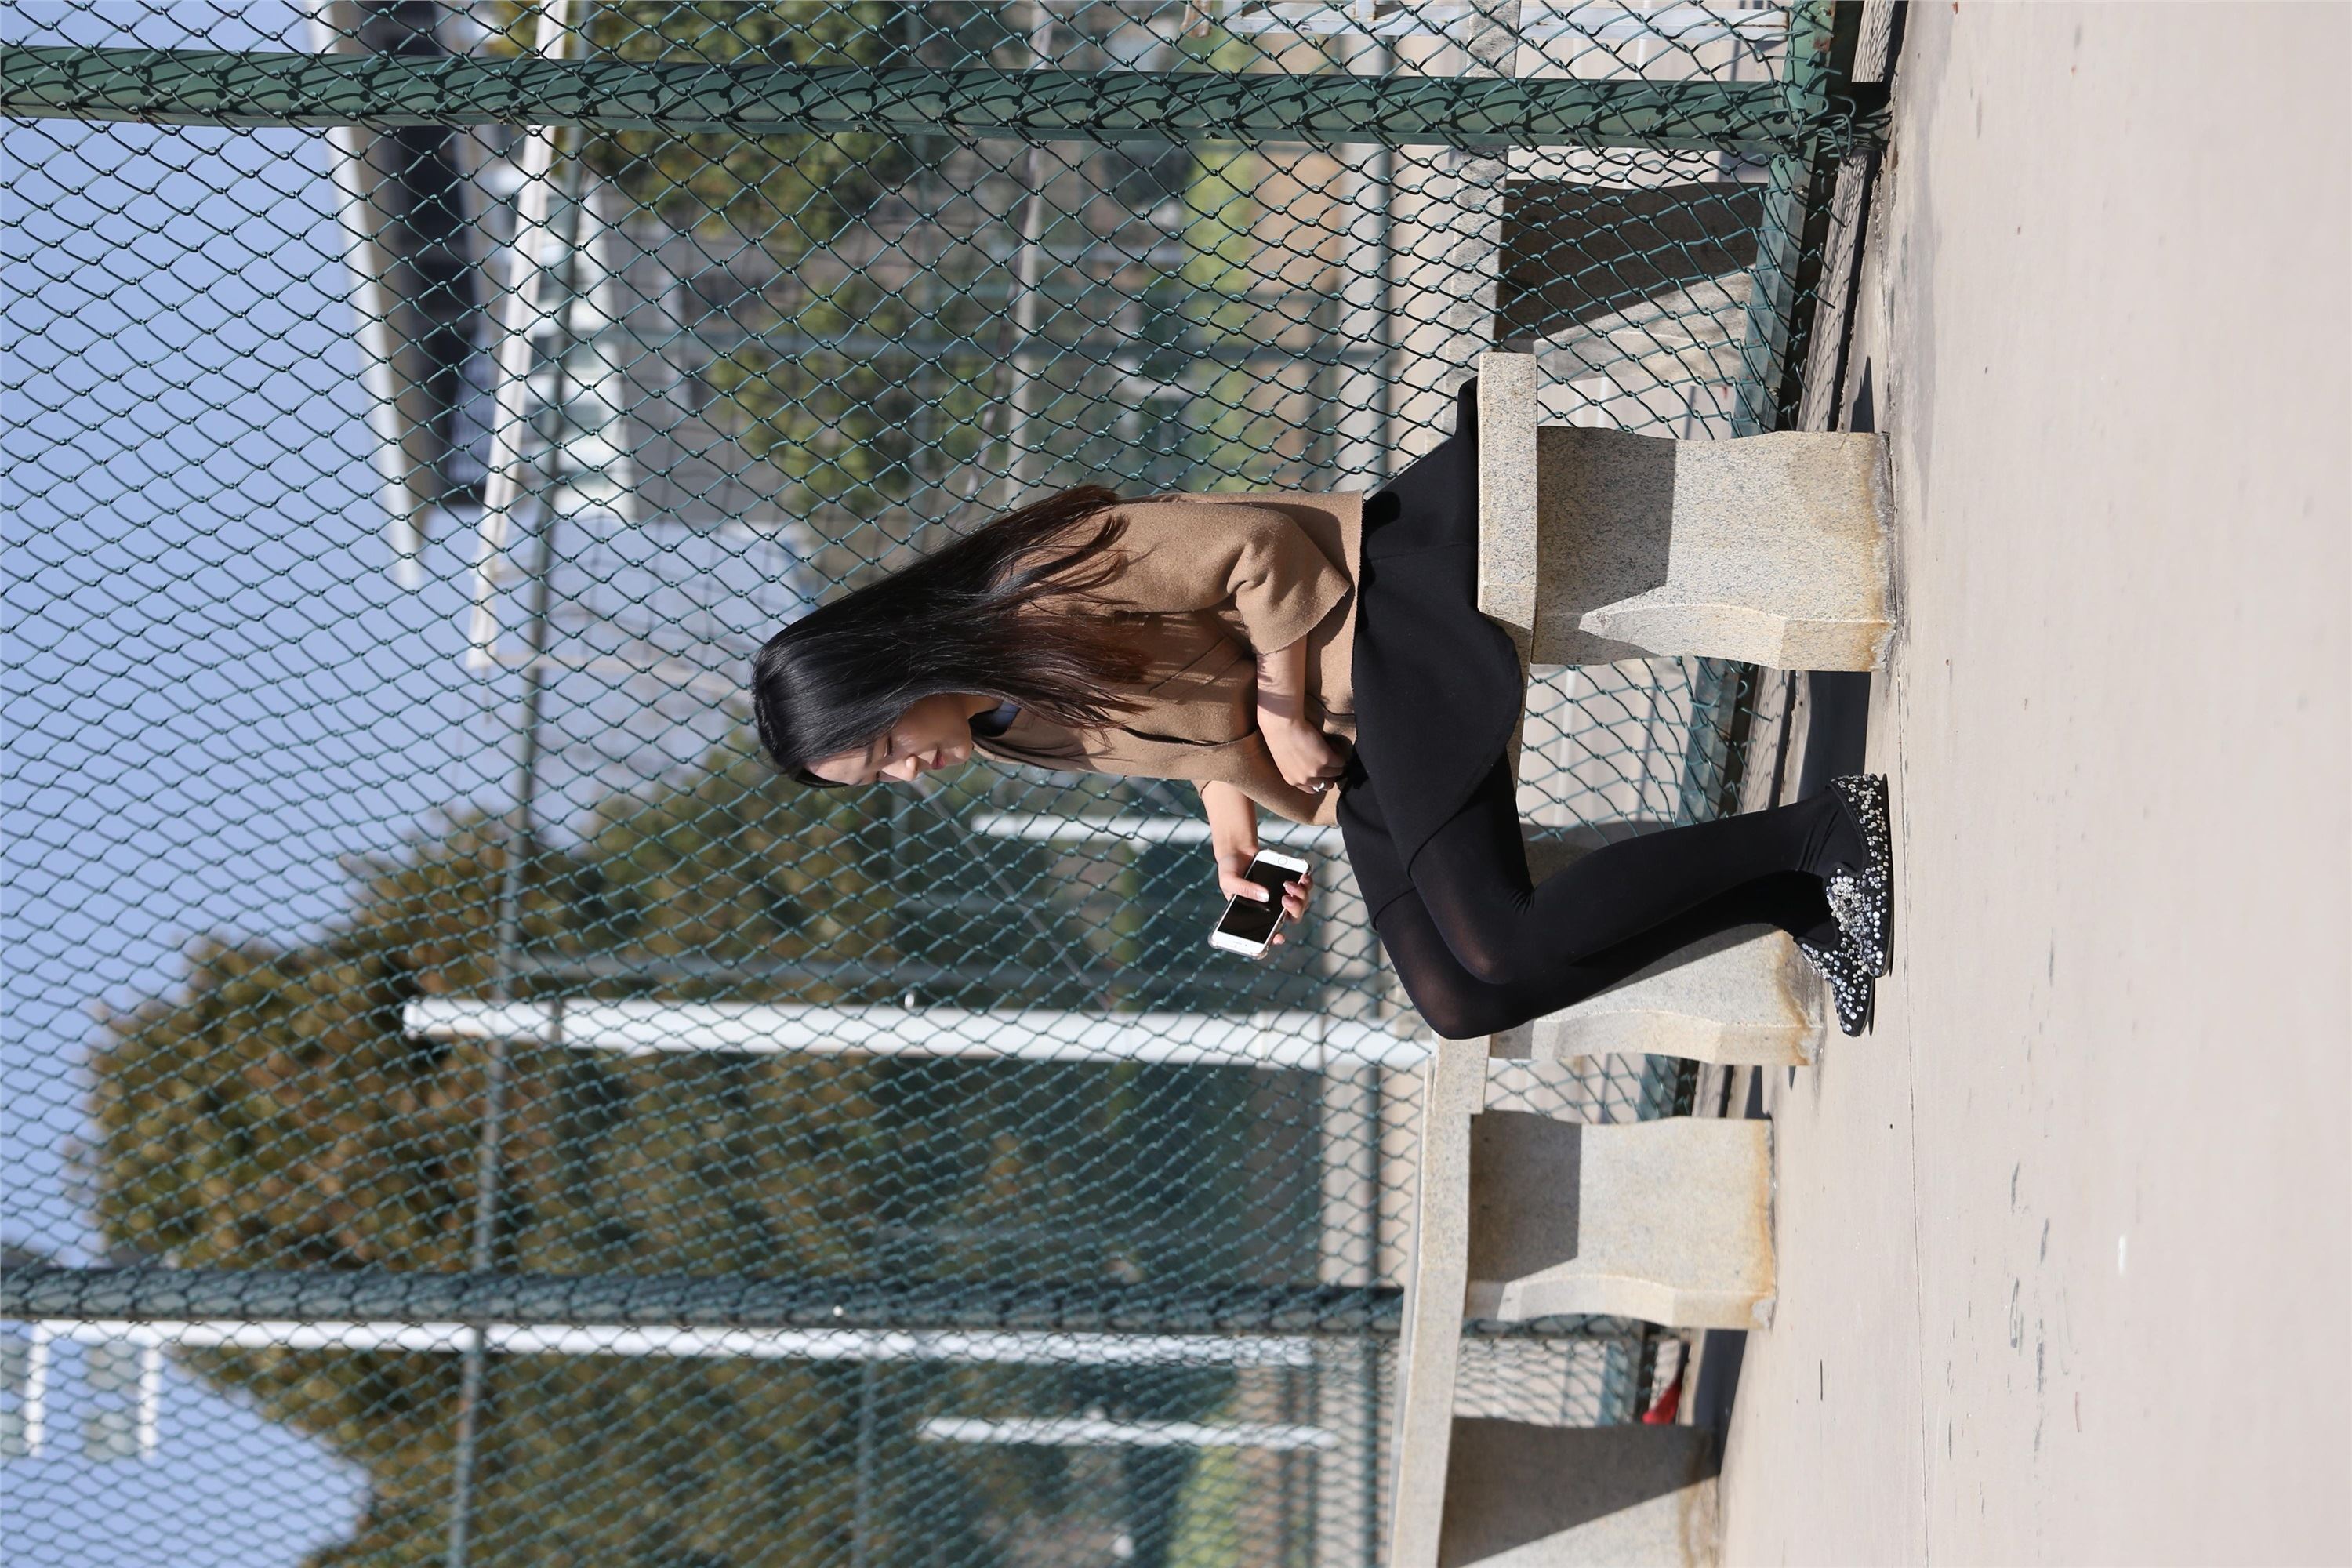 W015 dancer 5 - Playground Shuangshu 21